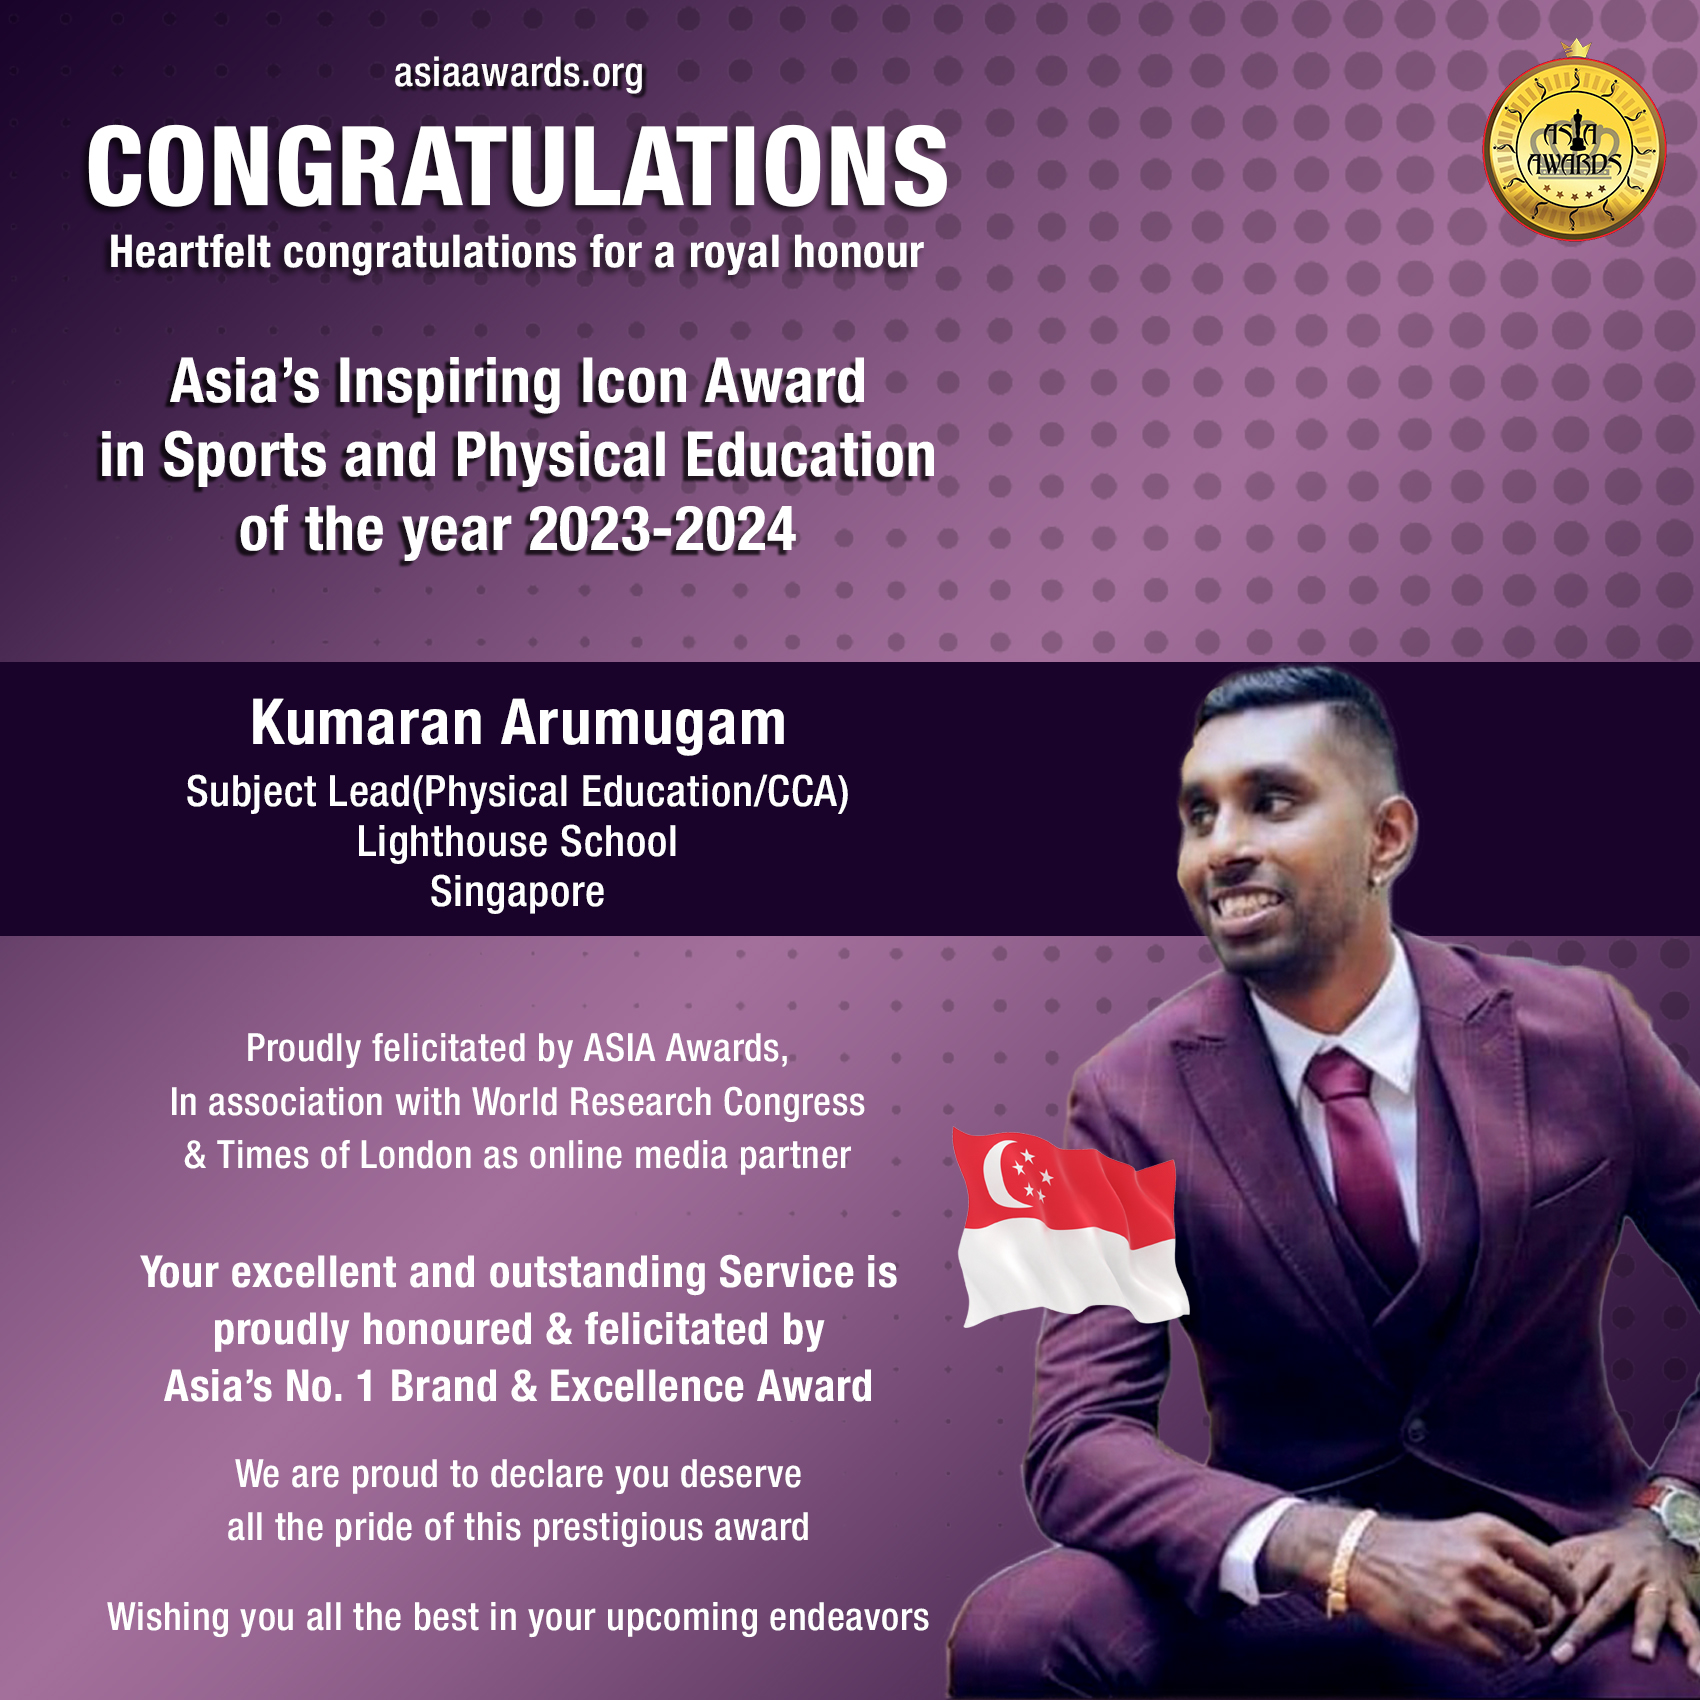 Kumaran Arumugam Has bagged Asia's Inspiring Icon Award in Sports and Physical Education